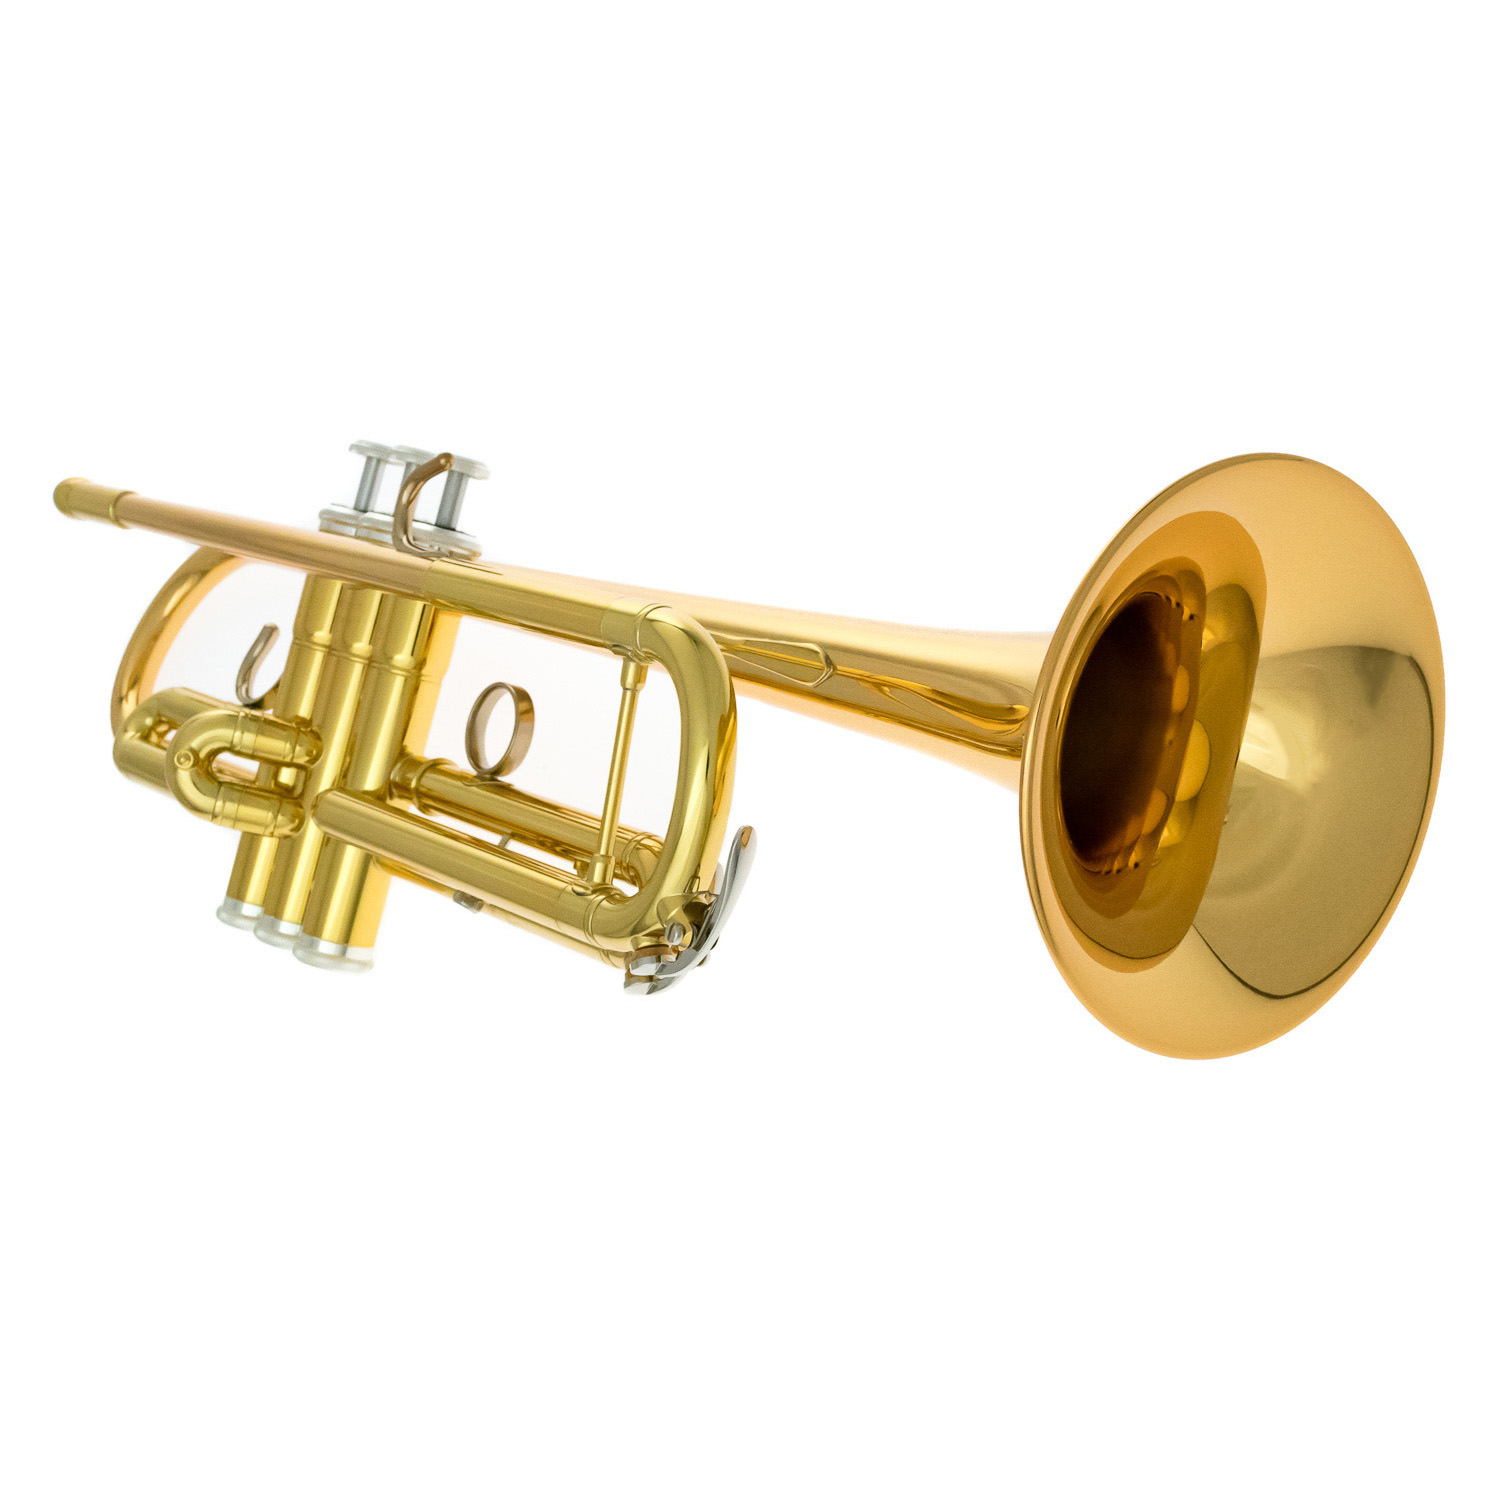 Yamaha Bb Trumpet - YTR 4335 G II